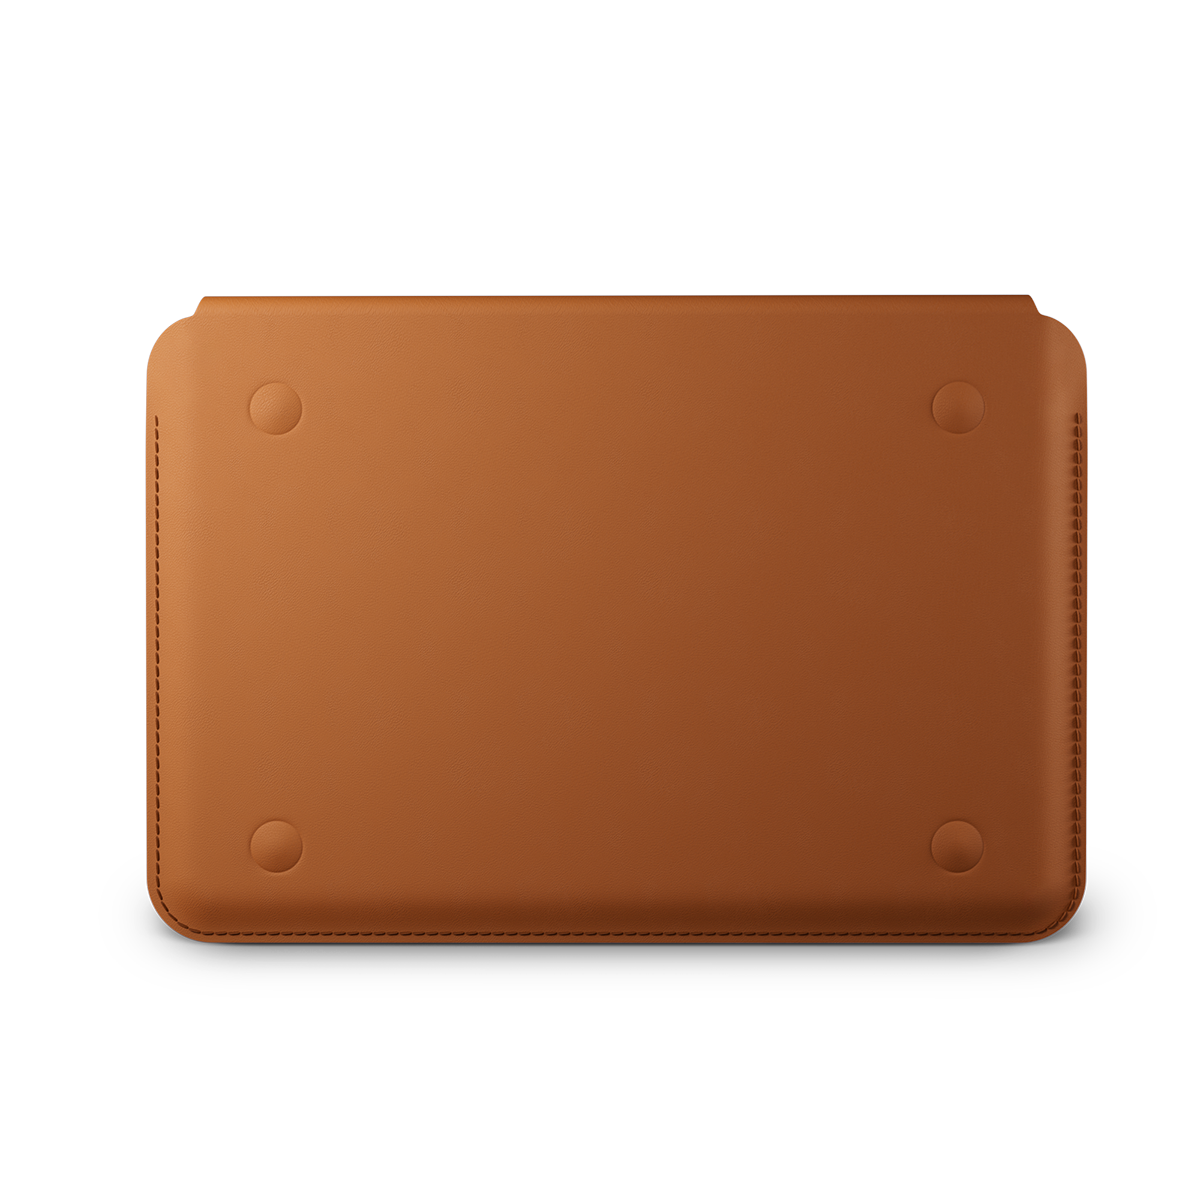 EPICO MacBook Air 13,3" bőrtok - barna